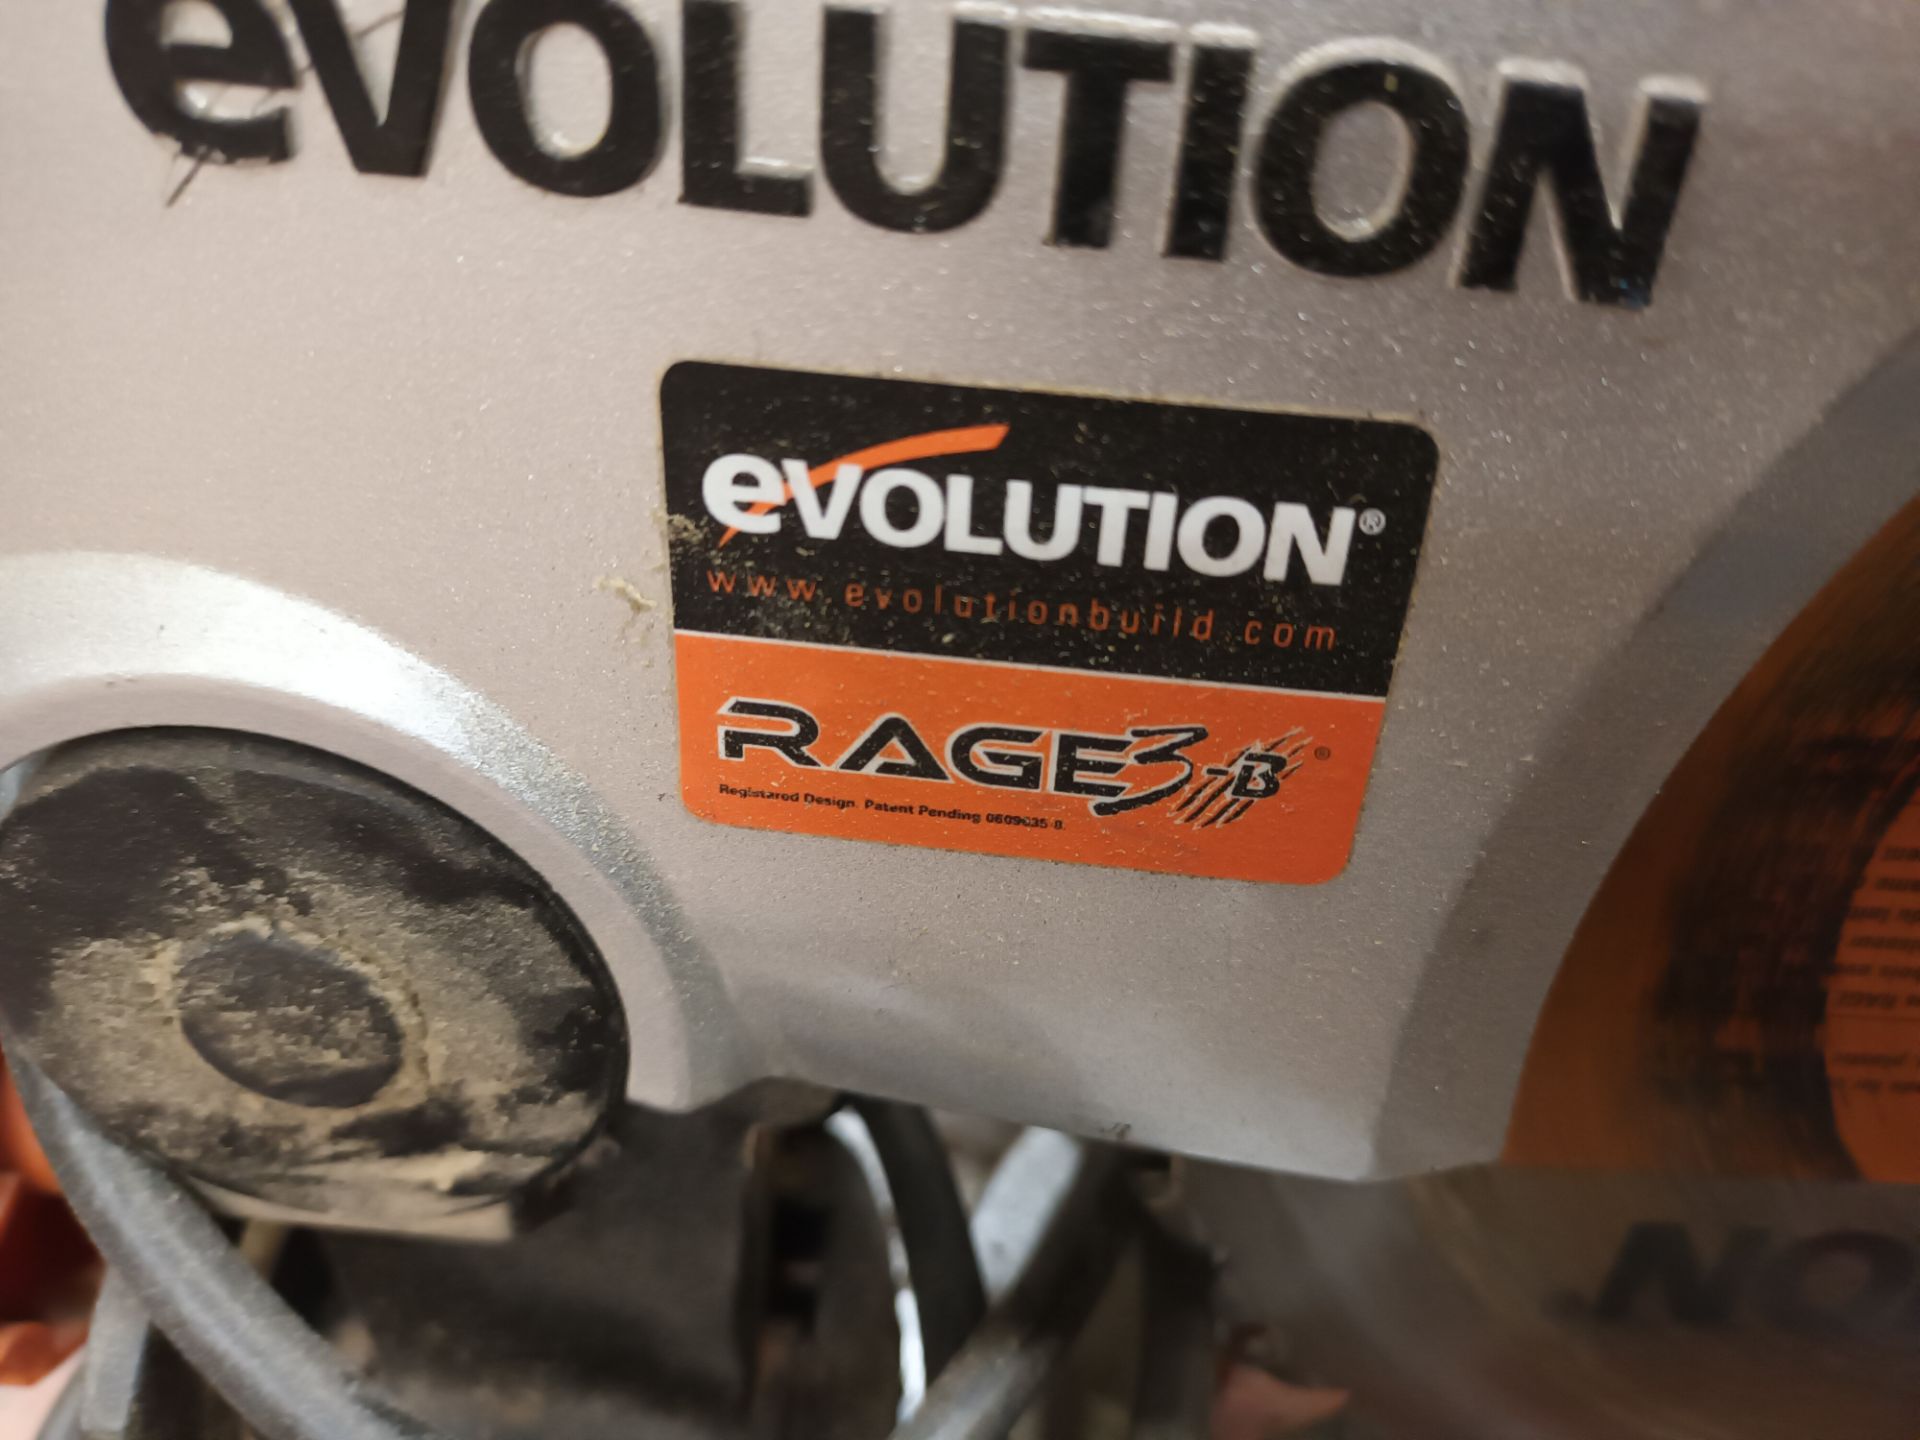 Evolution Rage3-B 210mm TCT multipurpose compound mitre saw - Image 2 of 4